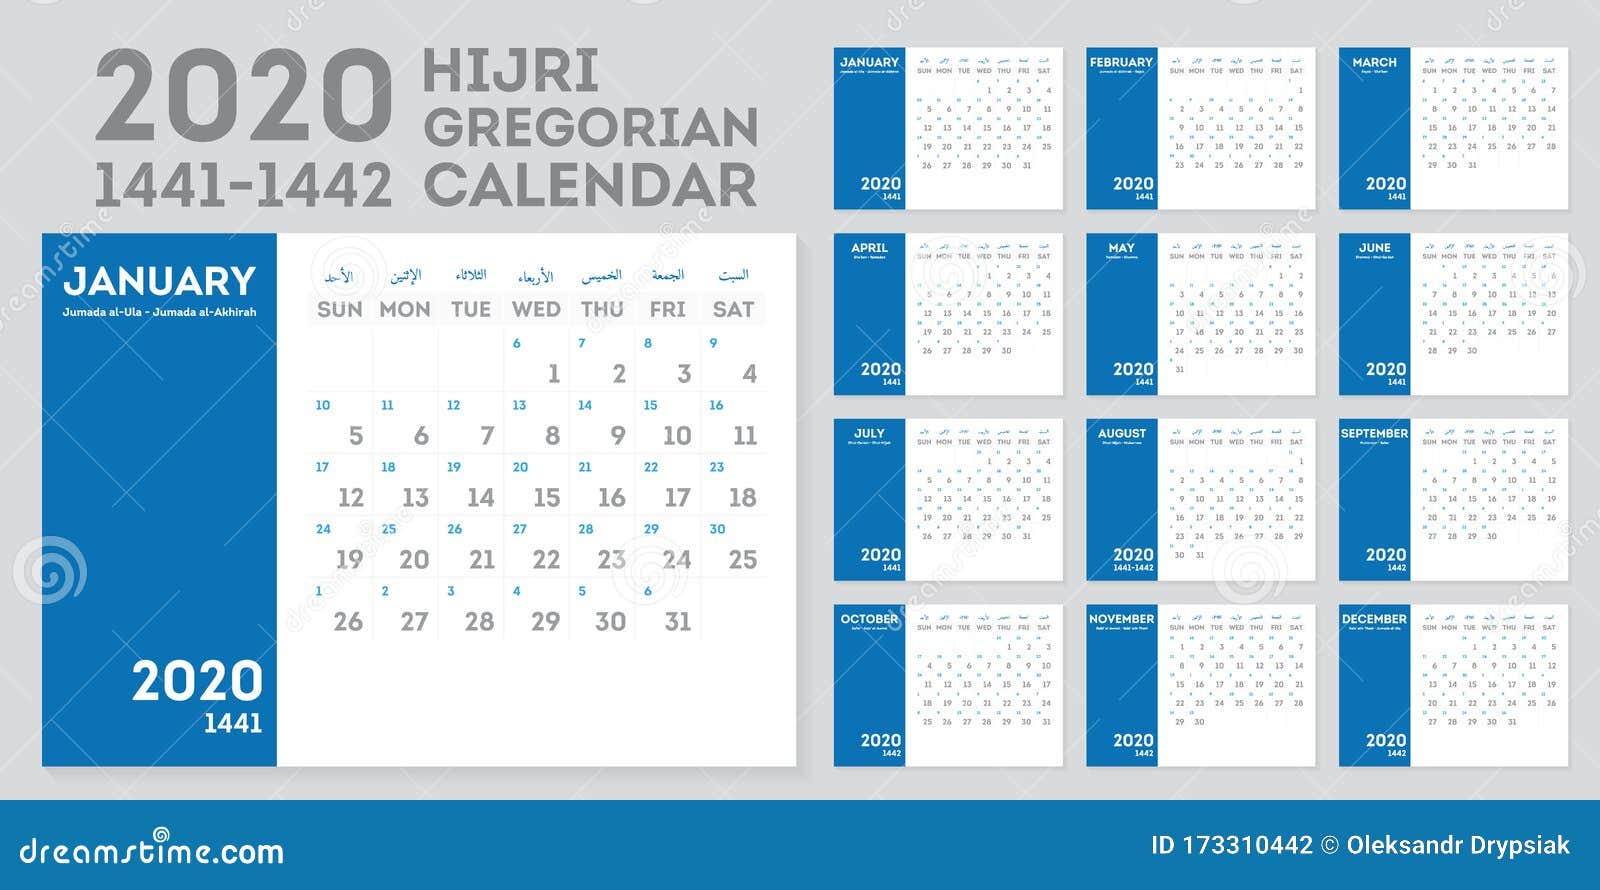 1441 1442 Hijri Calendar and Gregorian Calendar Year 2020 Week Starts